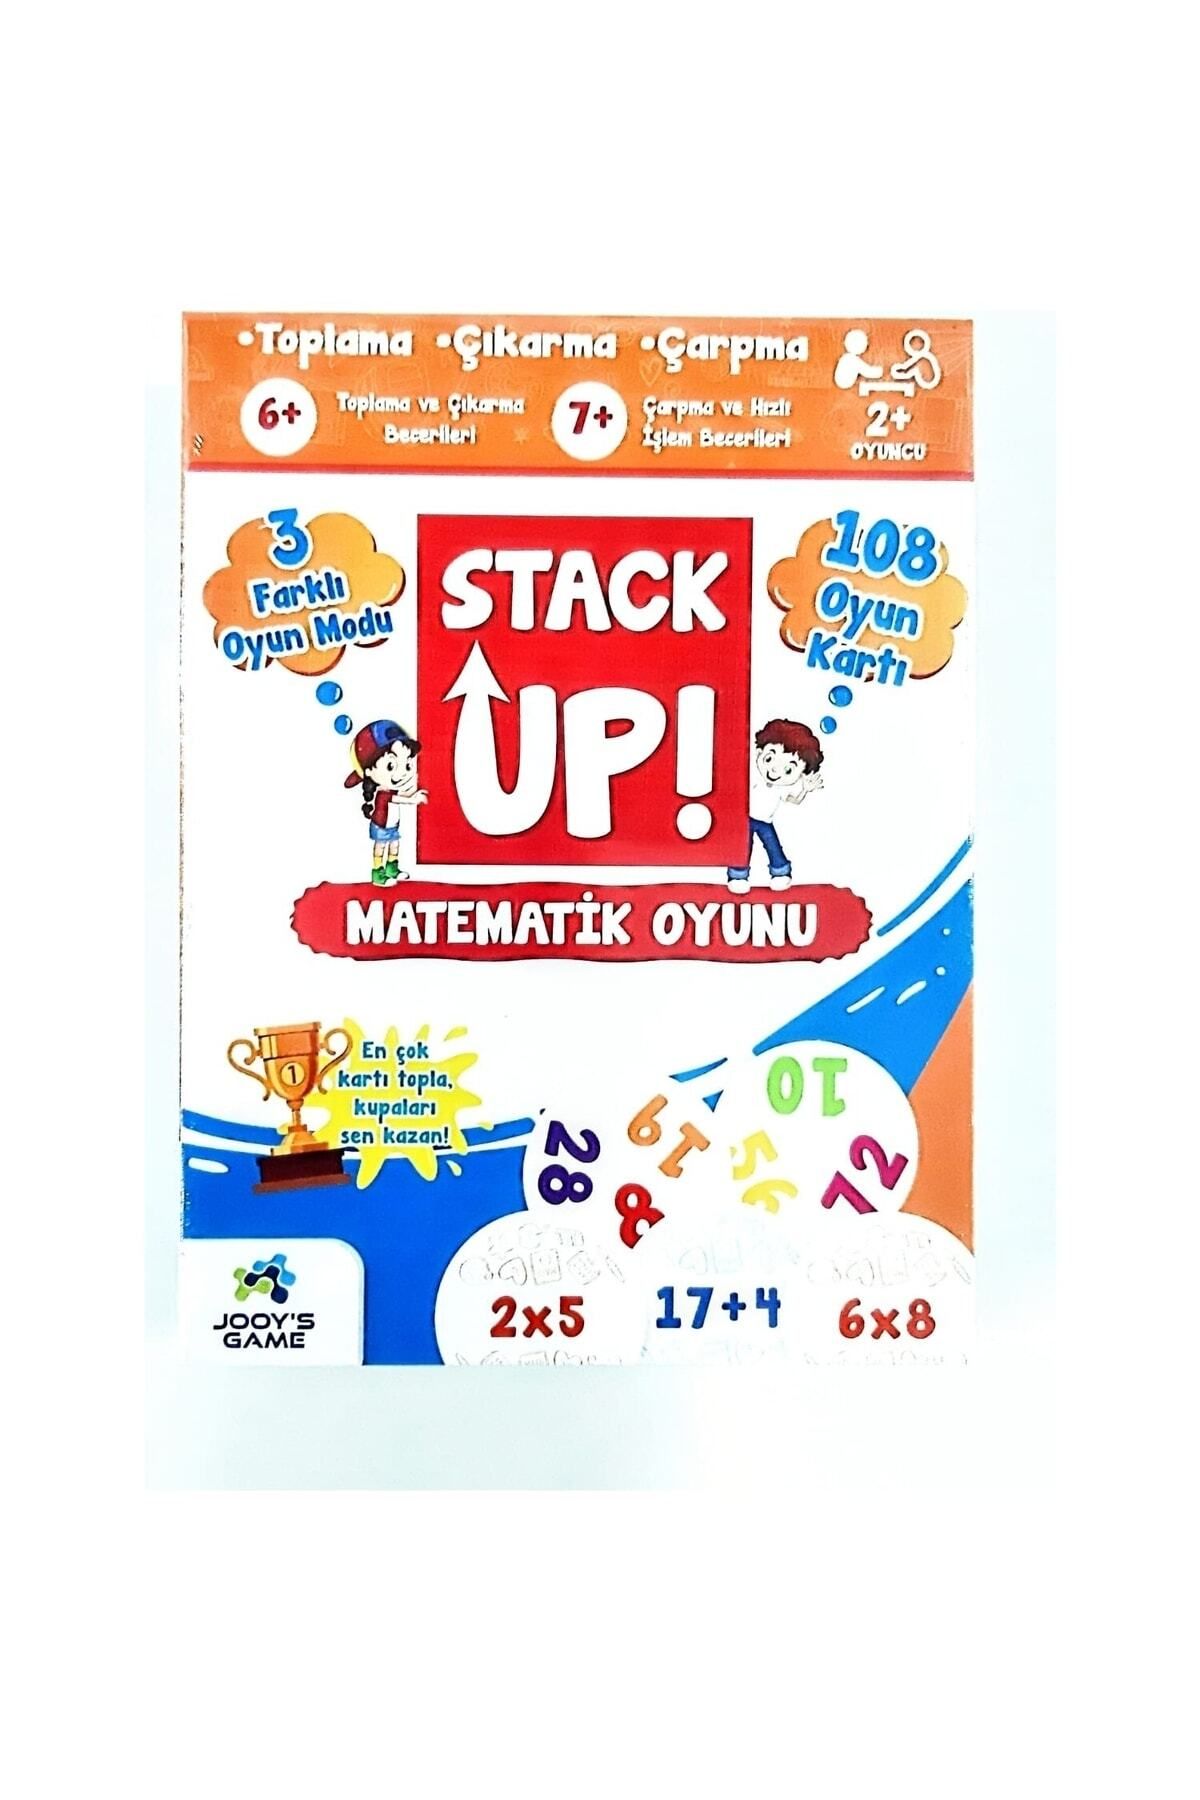 jooy's game Stack Up! Matemetik Oyunu